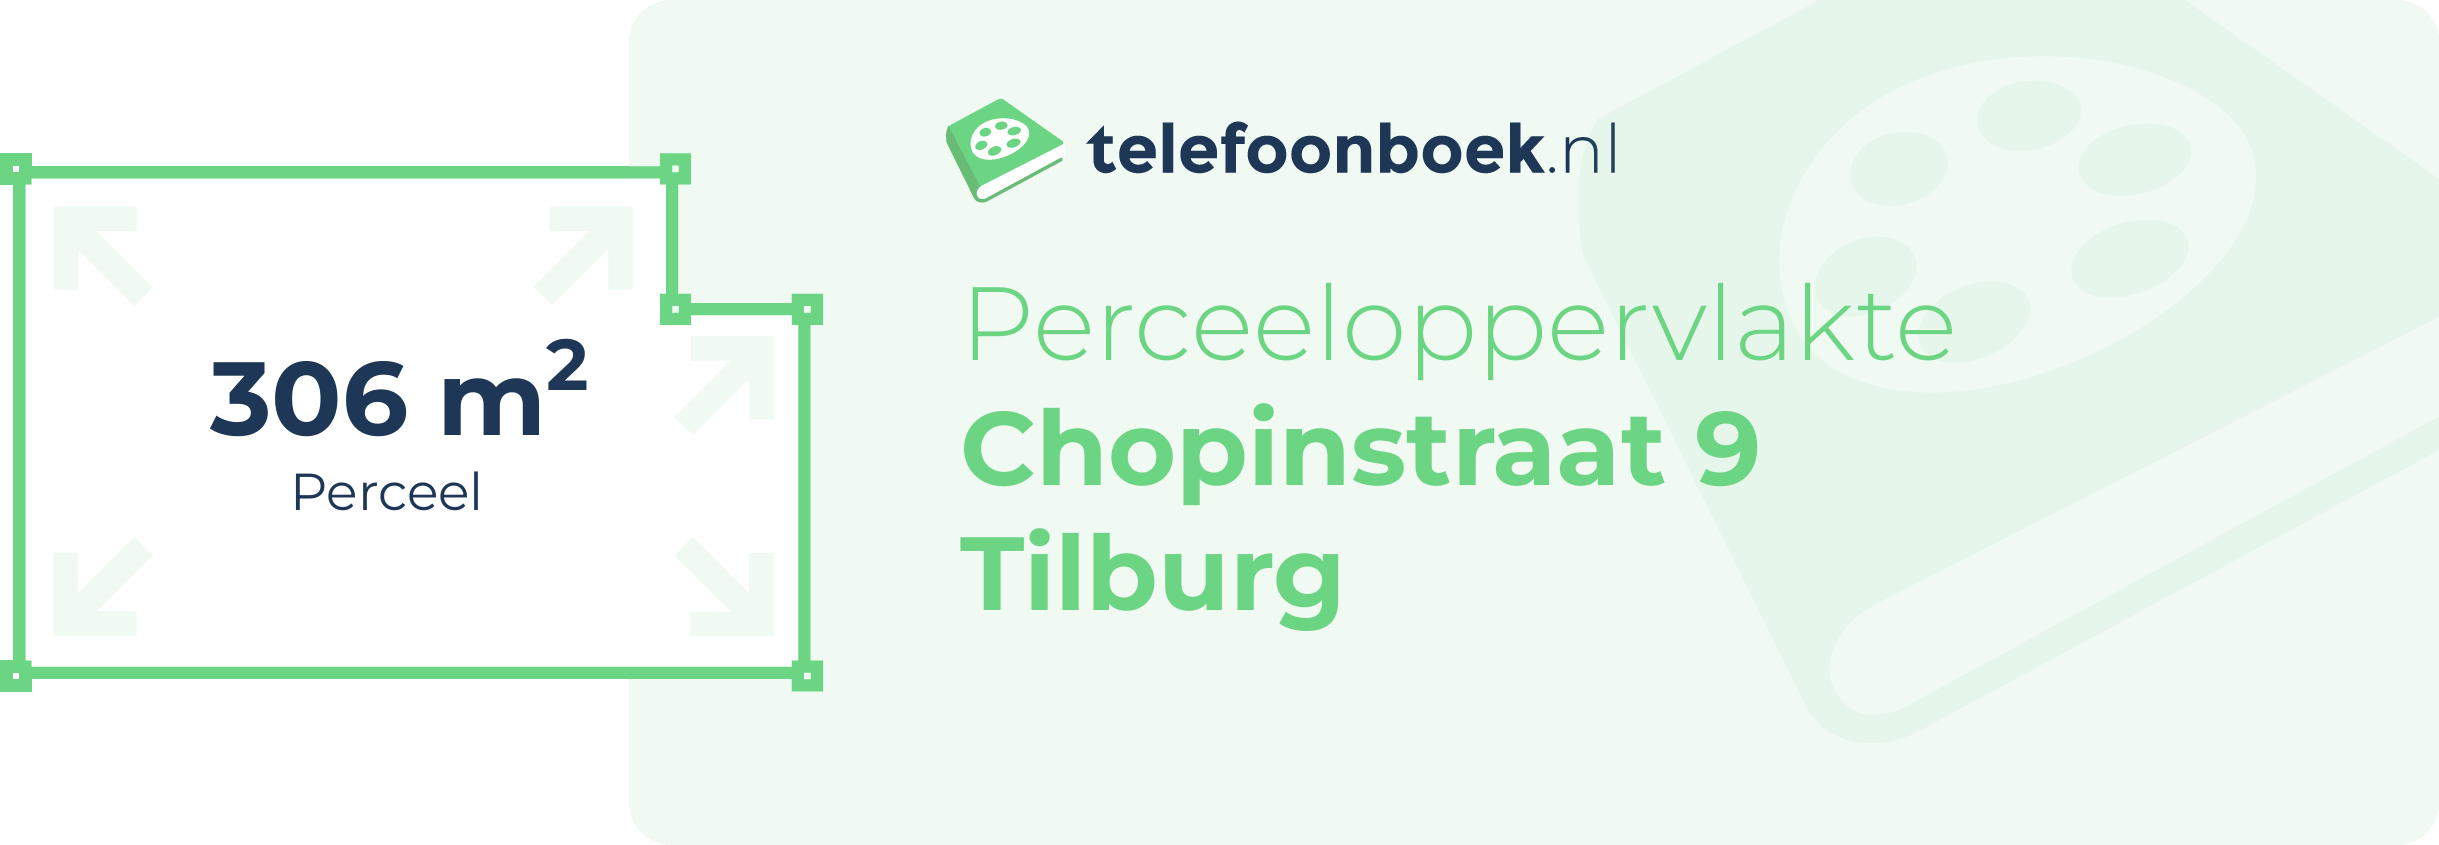 Perceeloppervlakte Chopinstraat 9 Tilburg